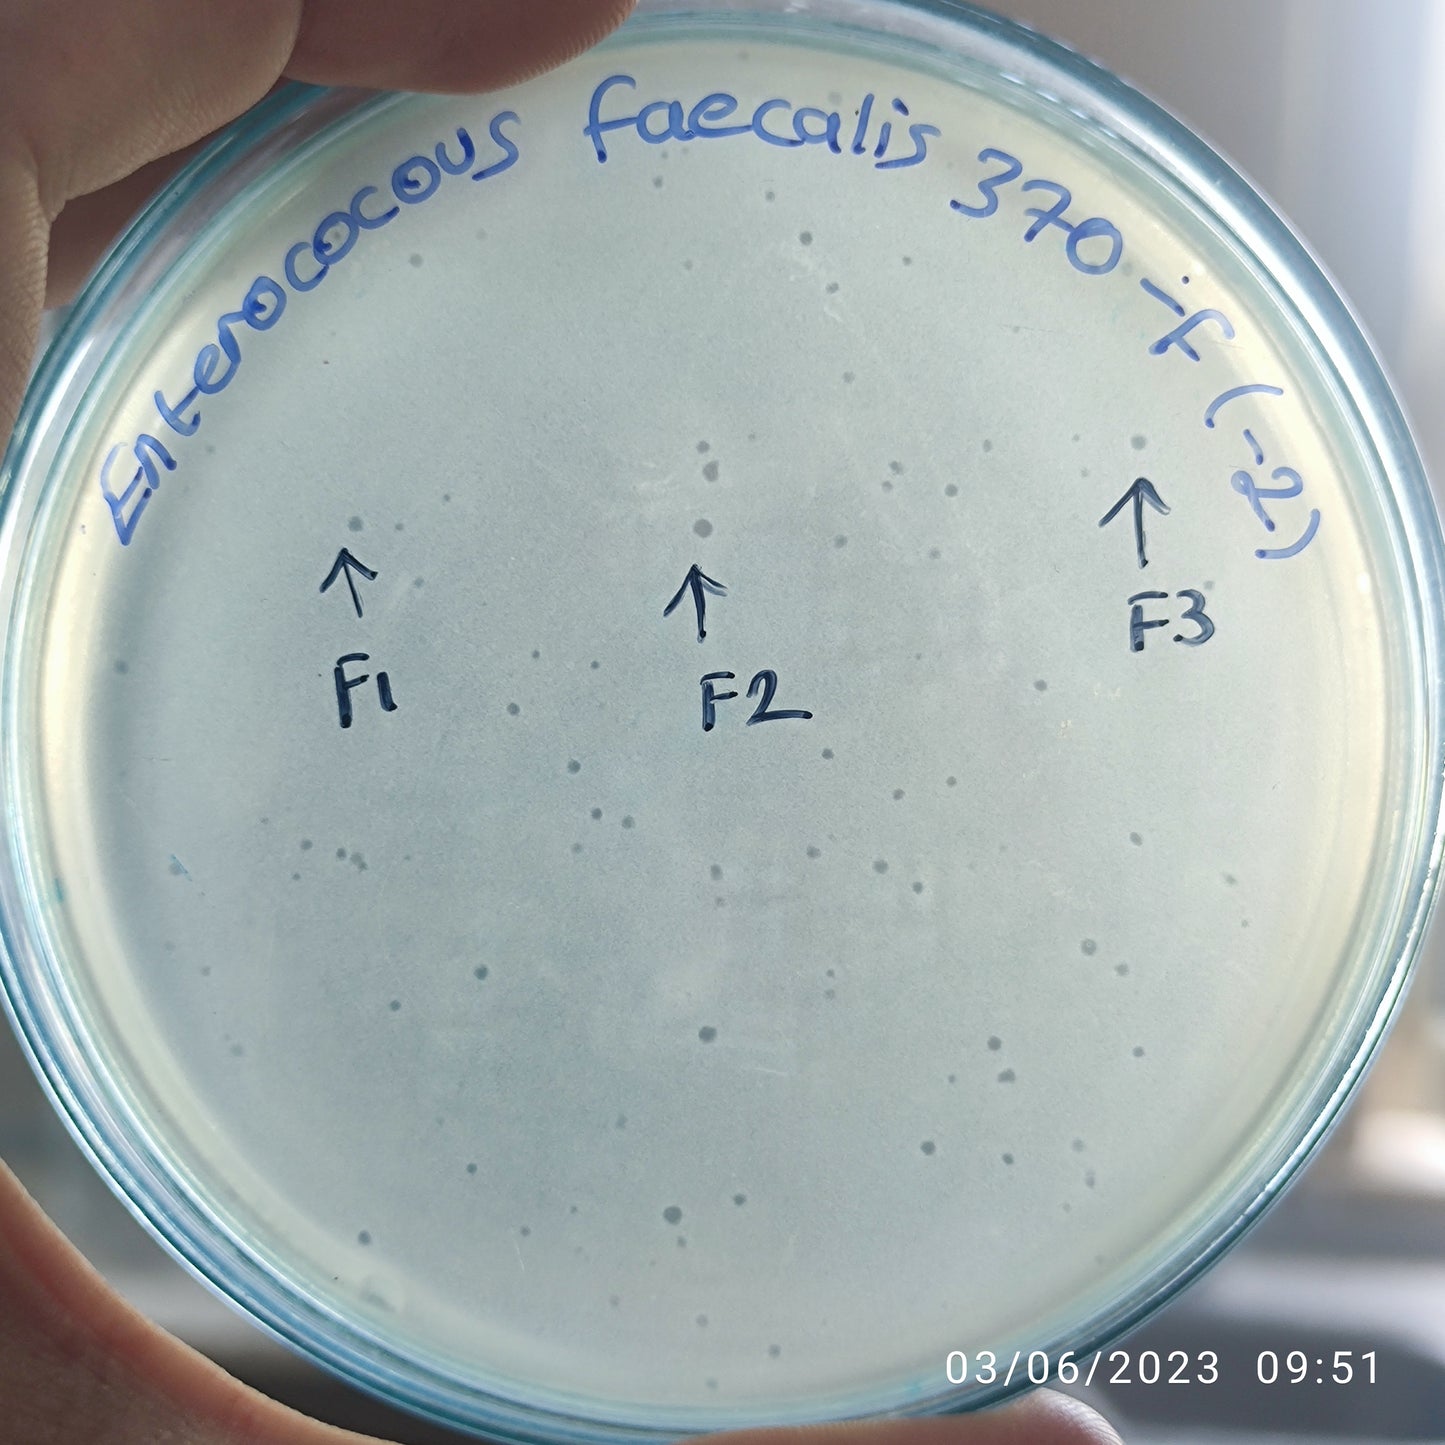 Enterococcus faecalis bacteriophage 1103370F